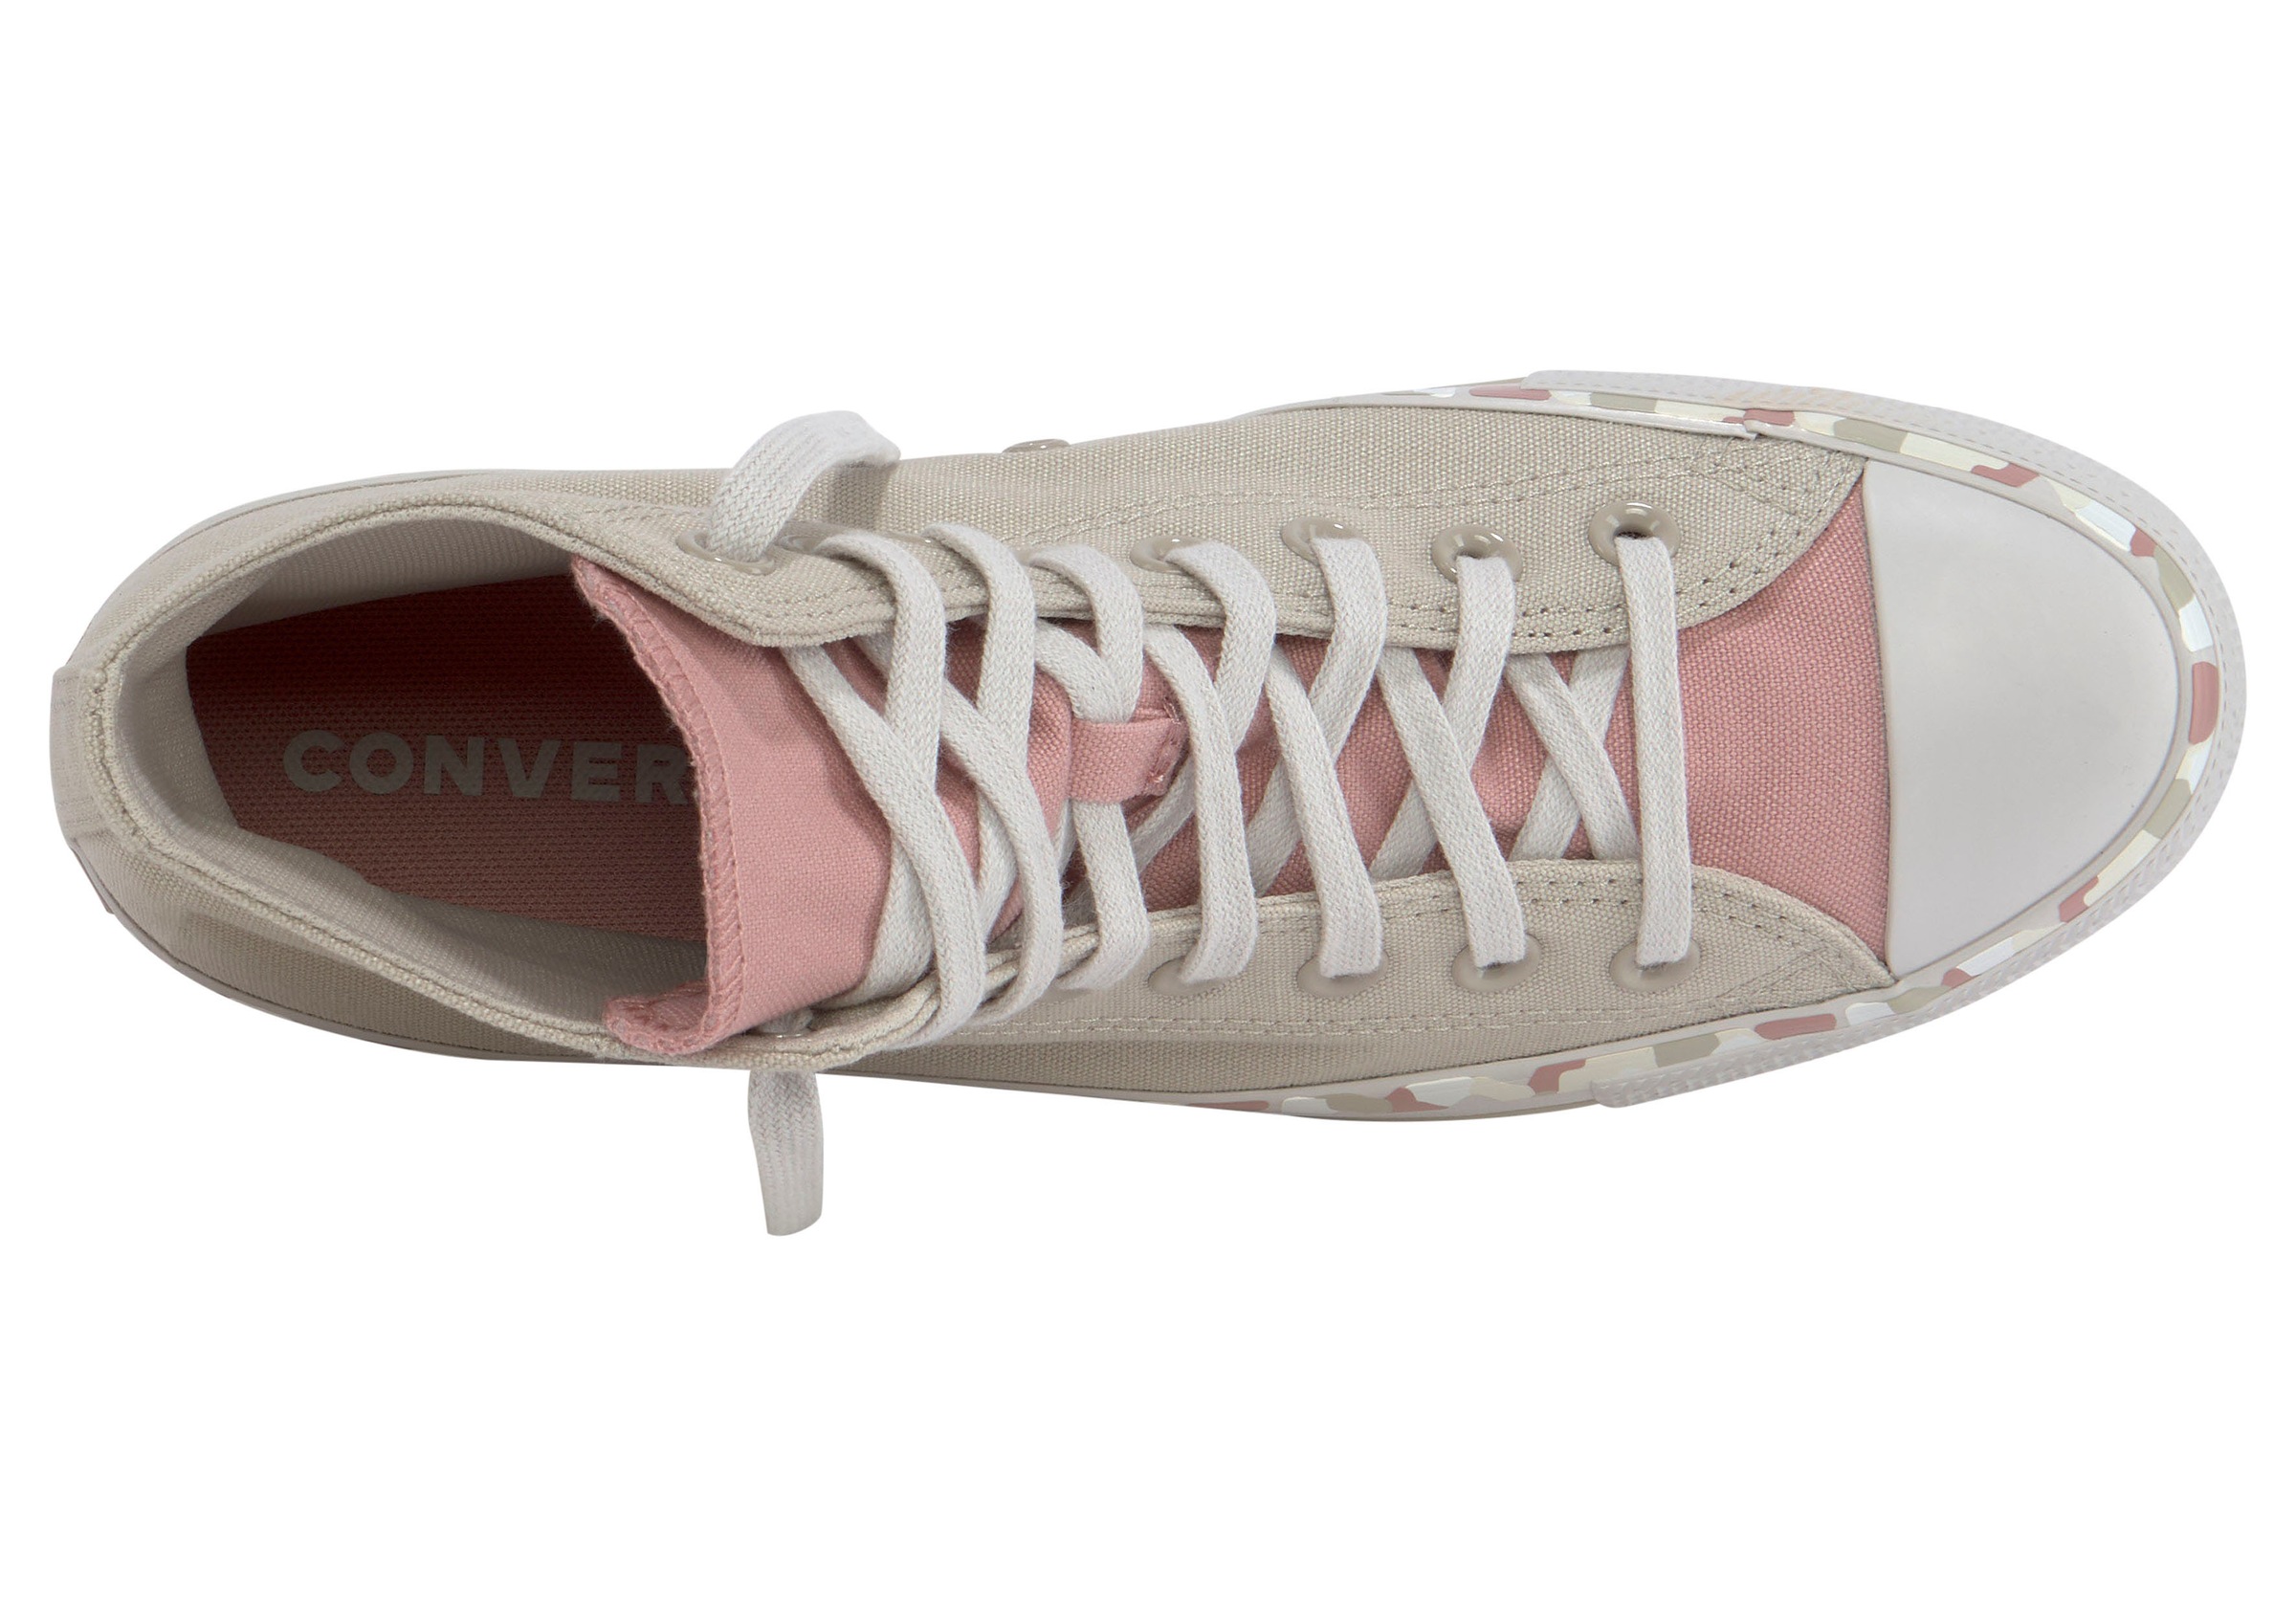 »CHUCK Online Shop bestellen Sneaker OTTO STAR im HI« TAYLOR Converse MARBLED ALL